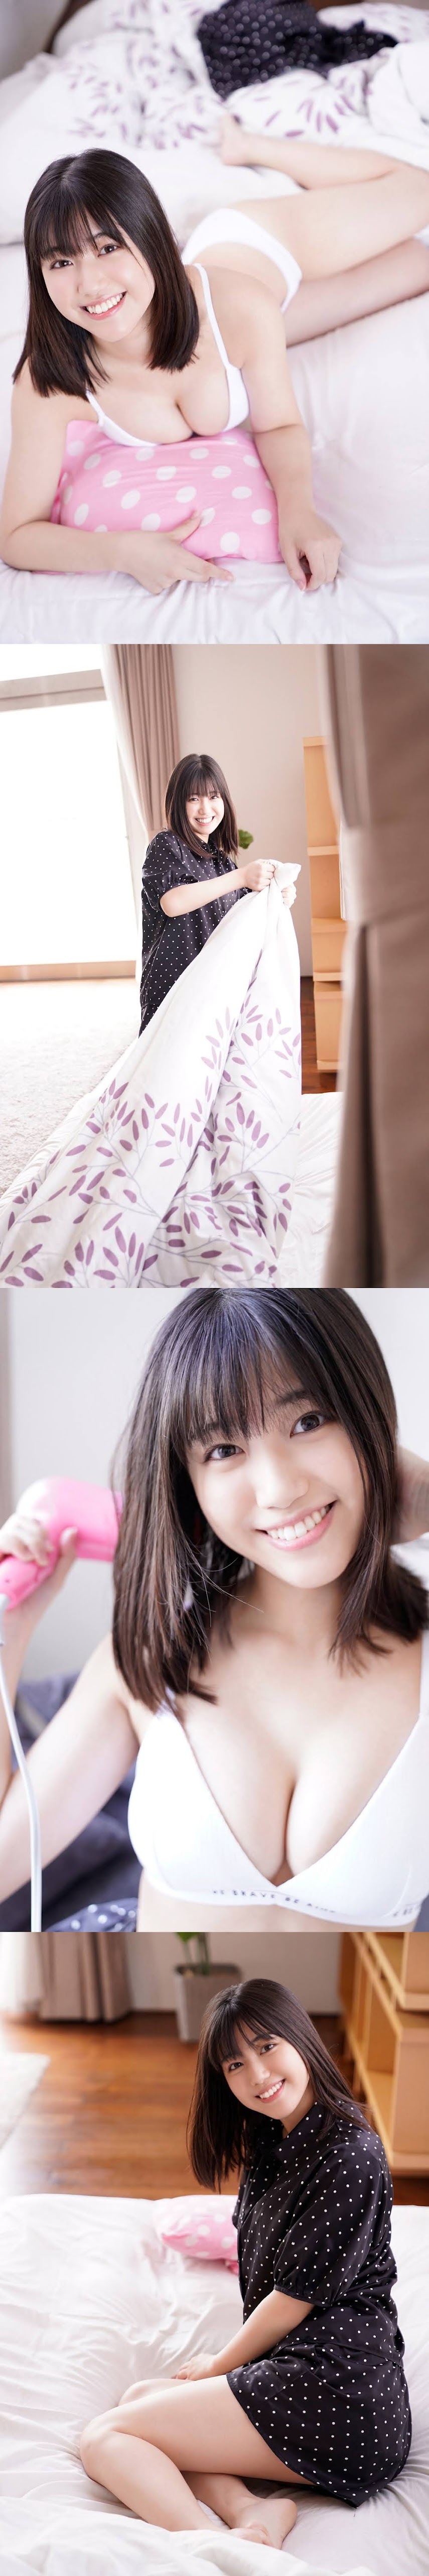 [Yanmaga Web] Karen Izumi 和泉芳怜 - Everyone's Morning Routing Cavu 01 みんなのモーニングルーティングラビア01 (2021-11-05)   P214579 - idols